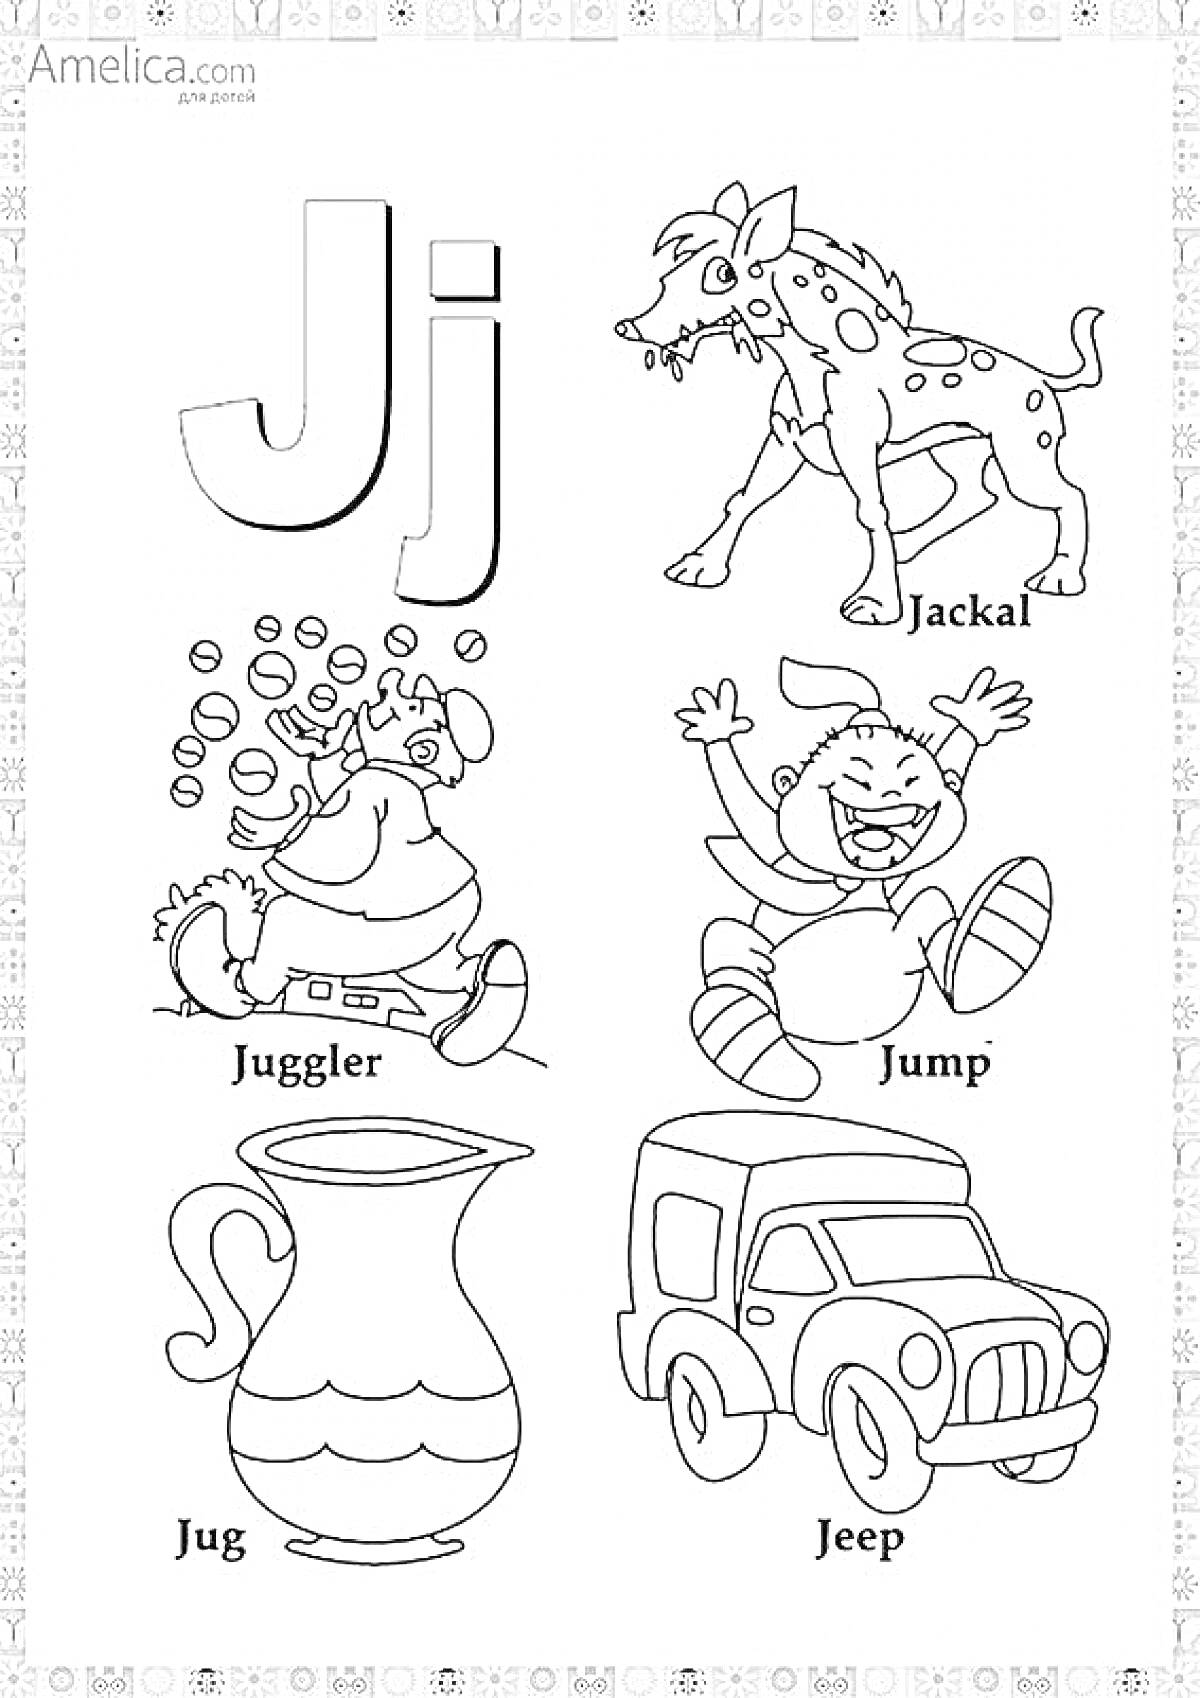 Раскраска Буква Jj с картинками: Jackal (шакал), Juggler (жонглёр), Jump (прыгать), Jug (кувшин), Jeep (джип)